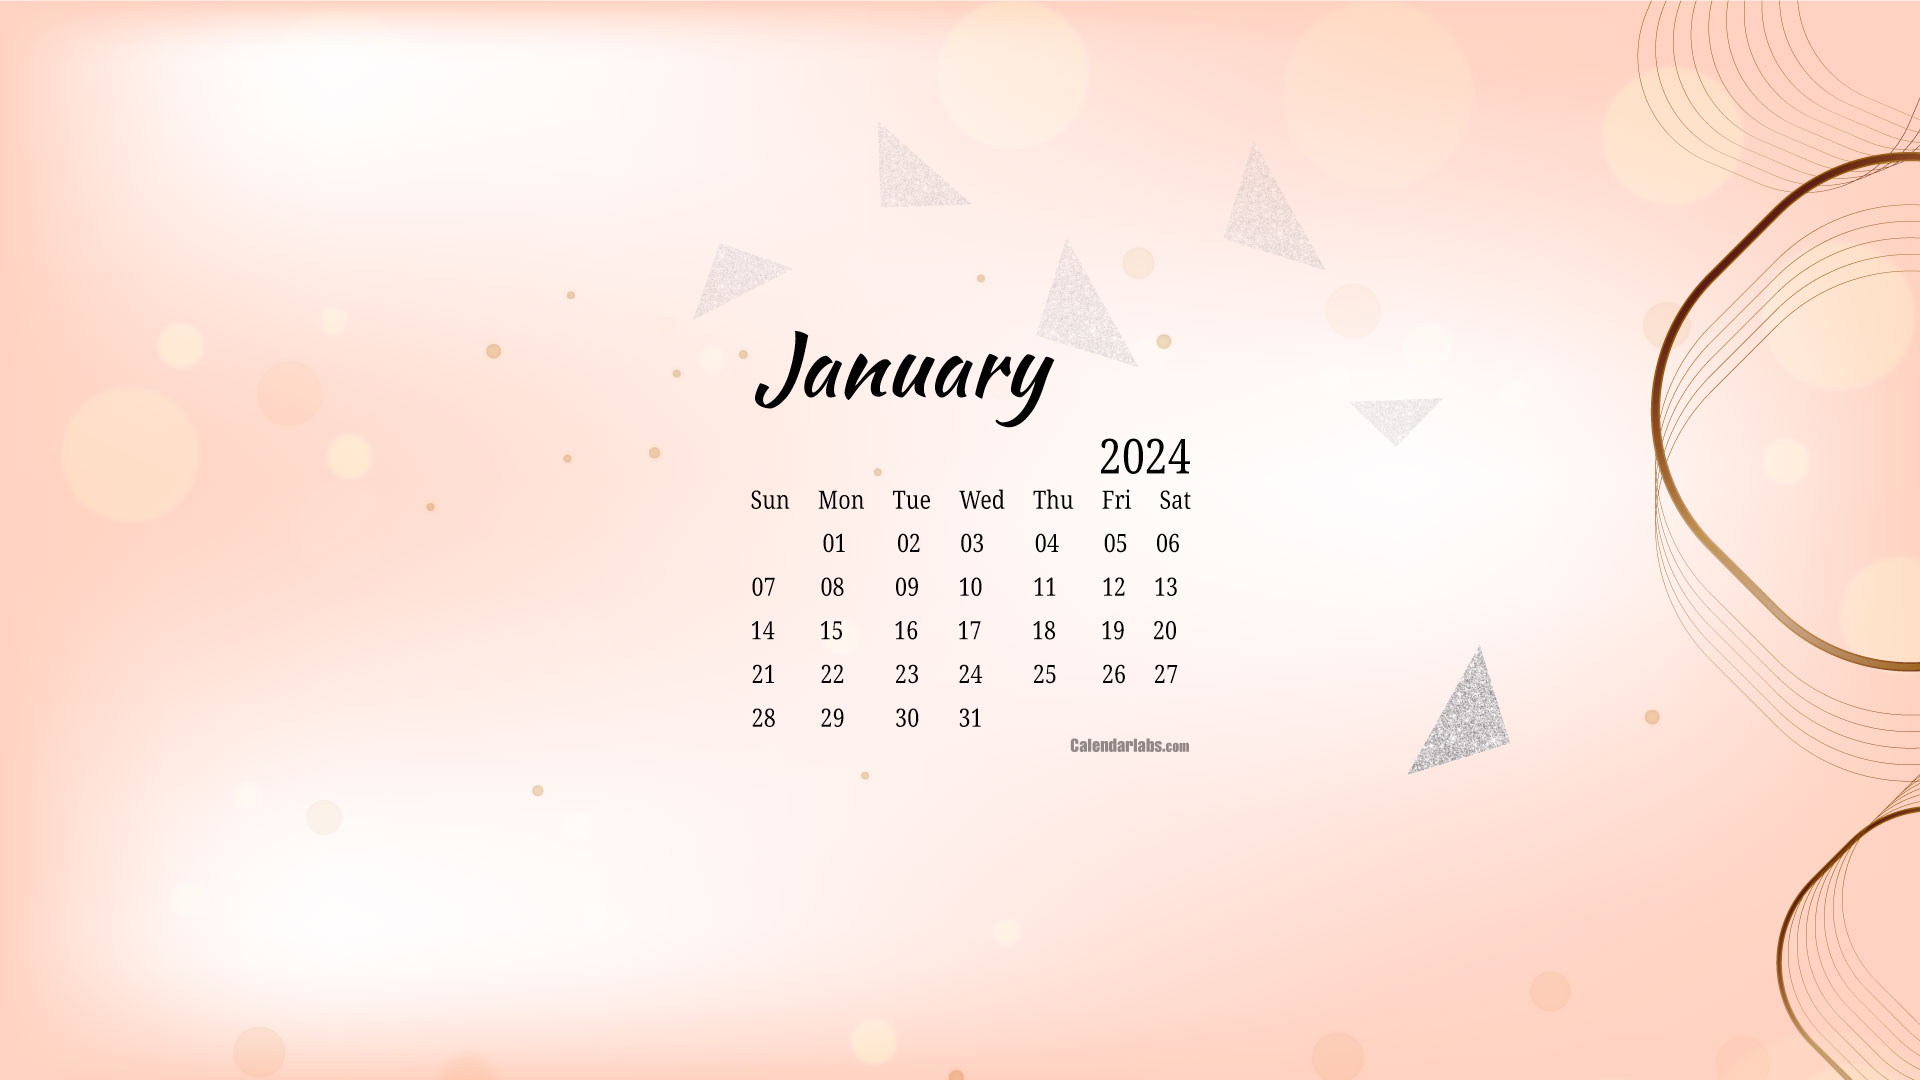 January 2024 Desktop Wallpaper Calendar - sayre lizzie